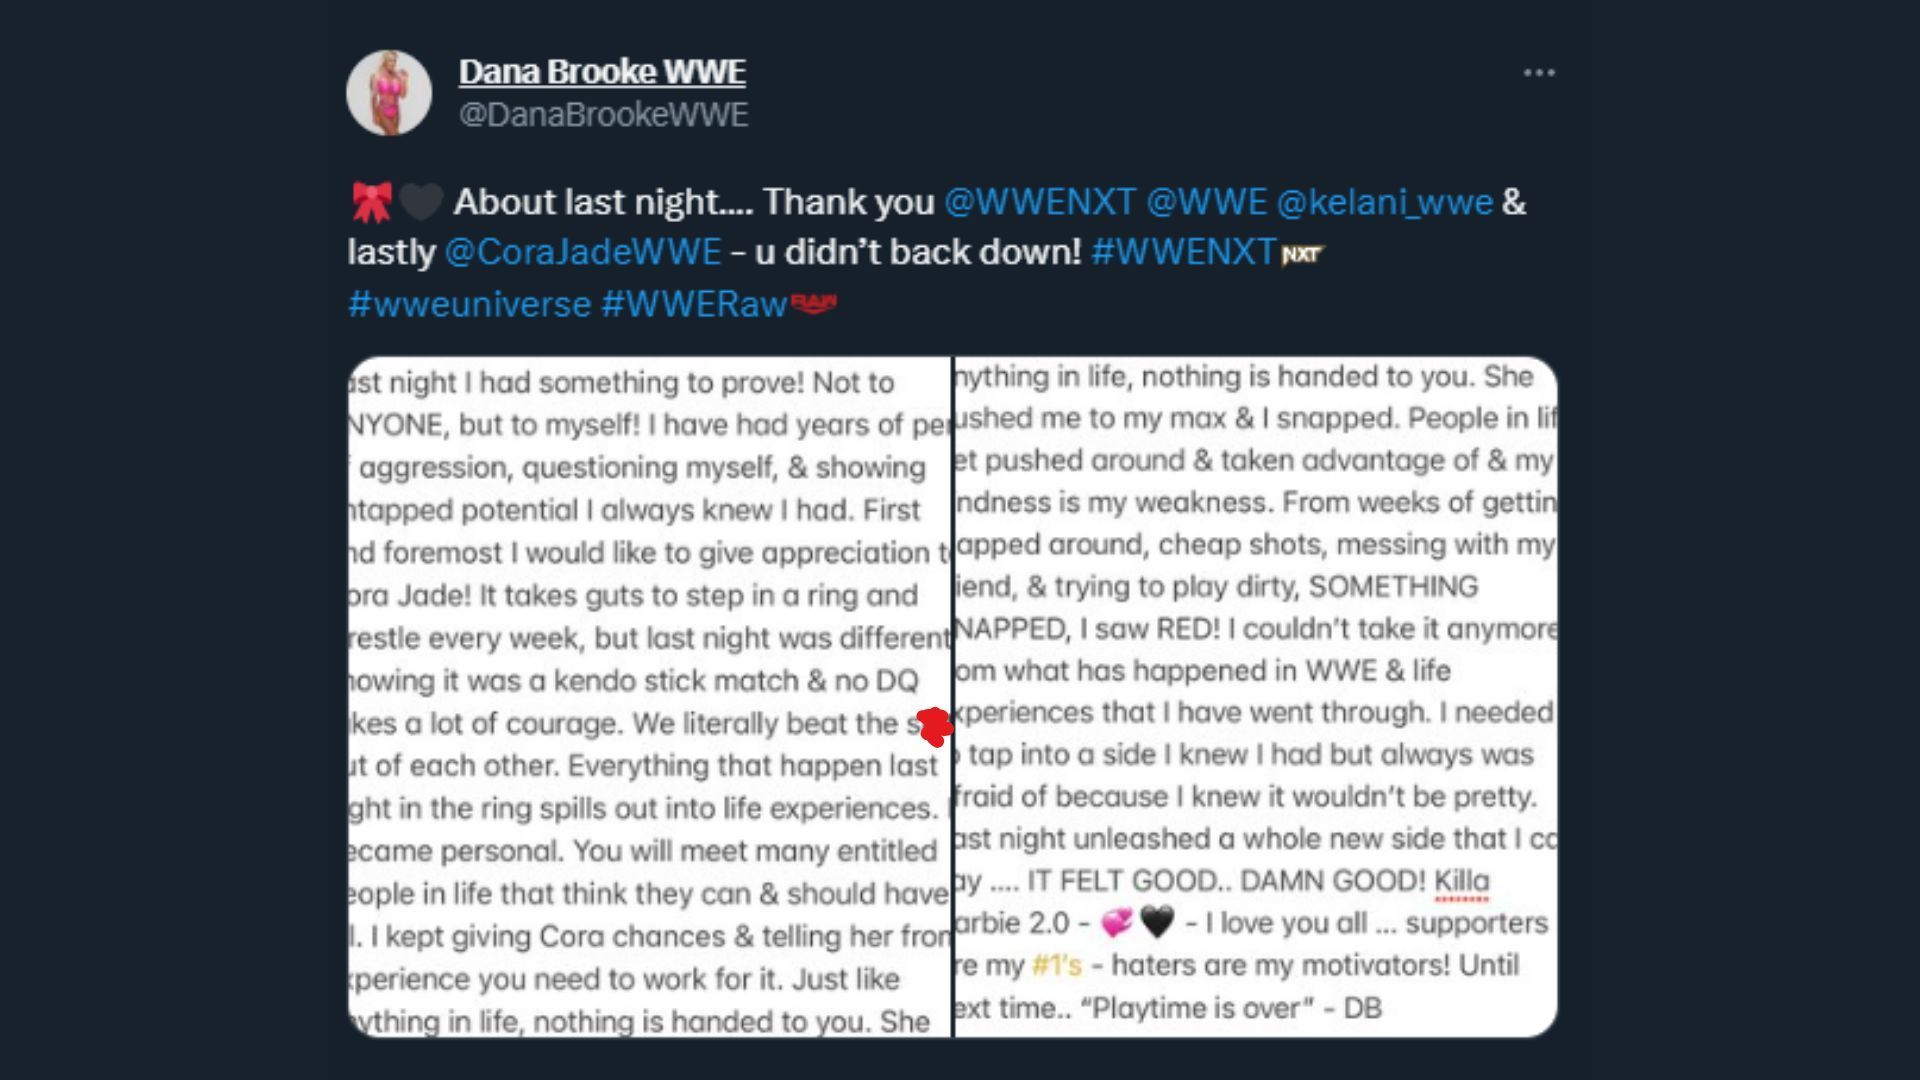 Dana Brooke had a lot to say in her tweet